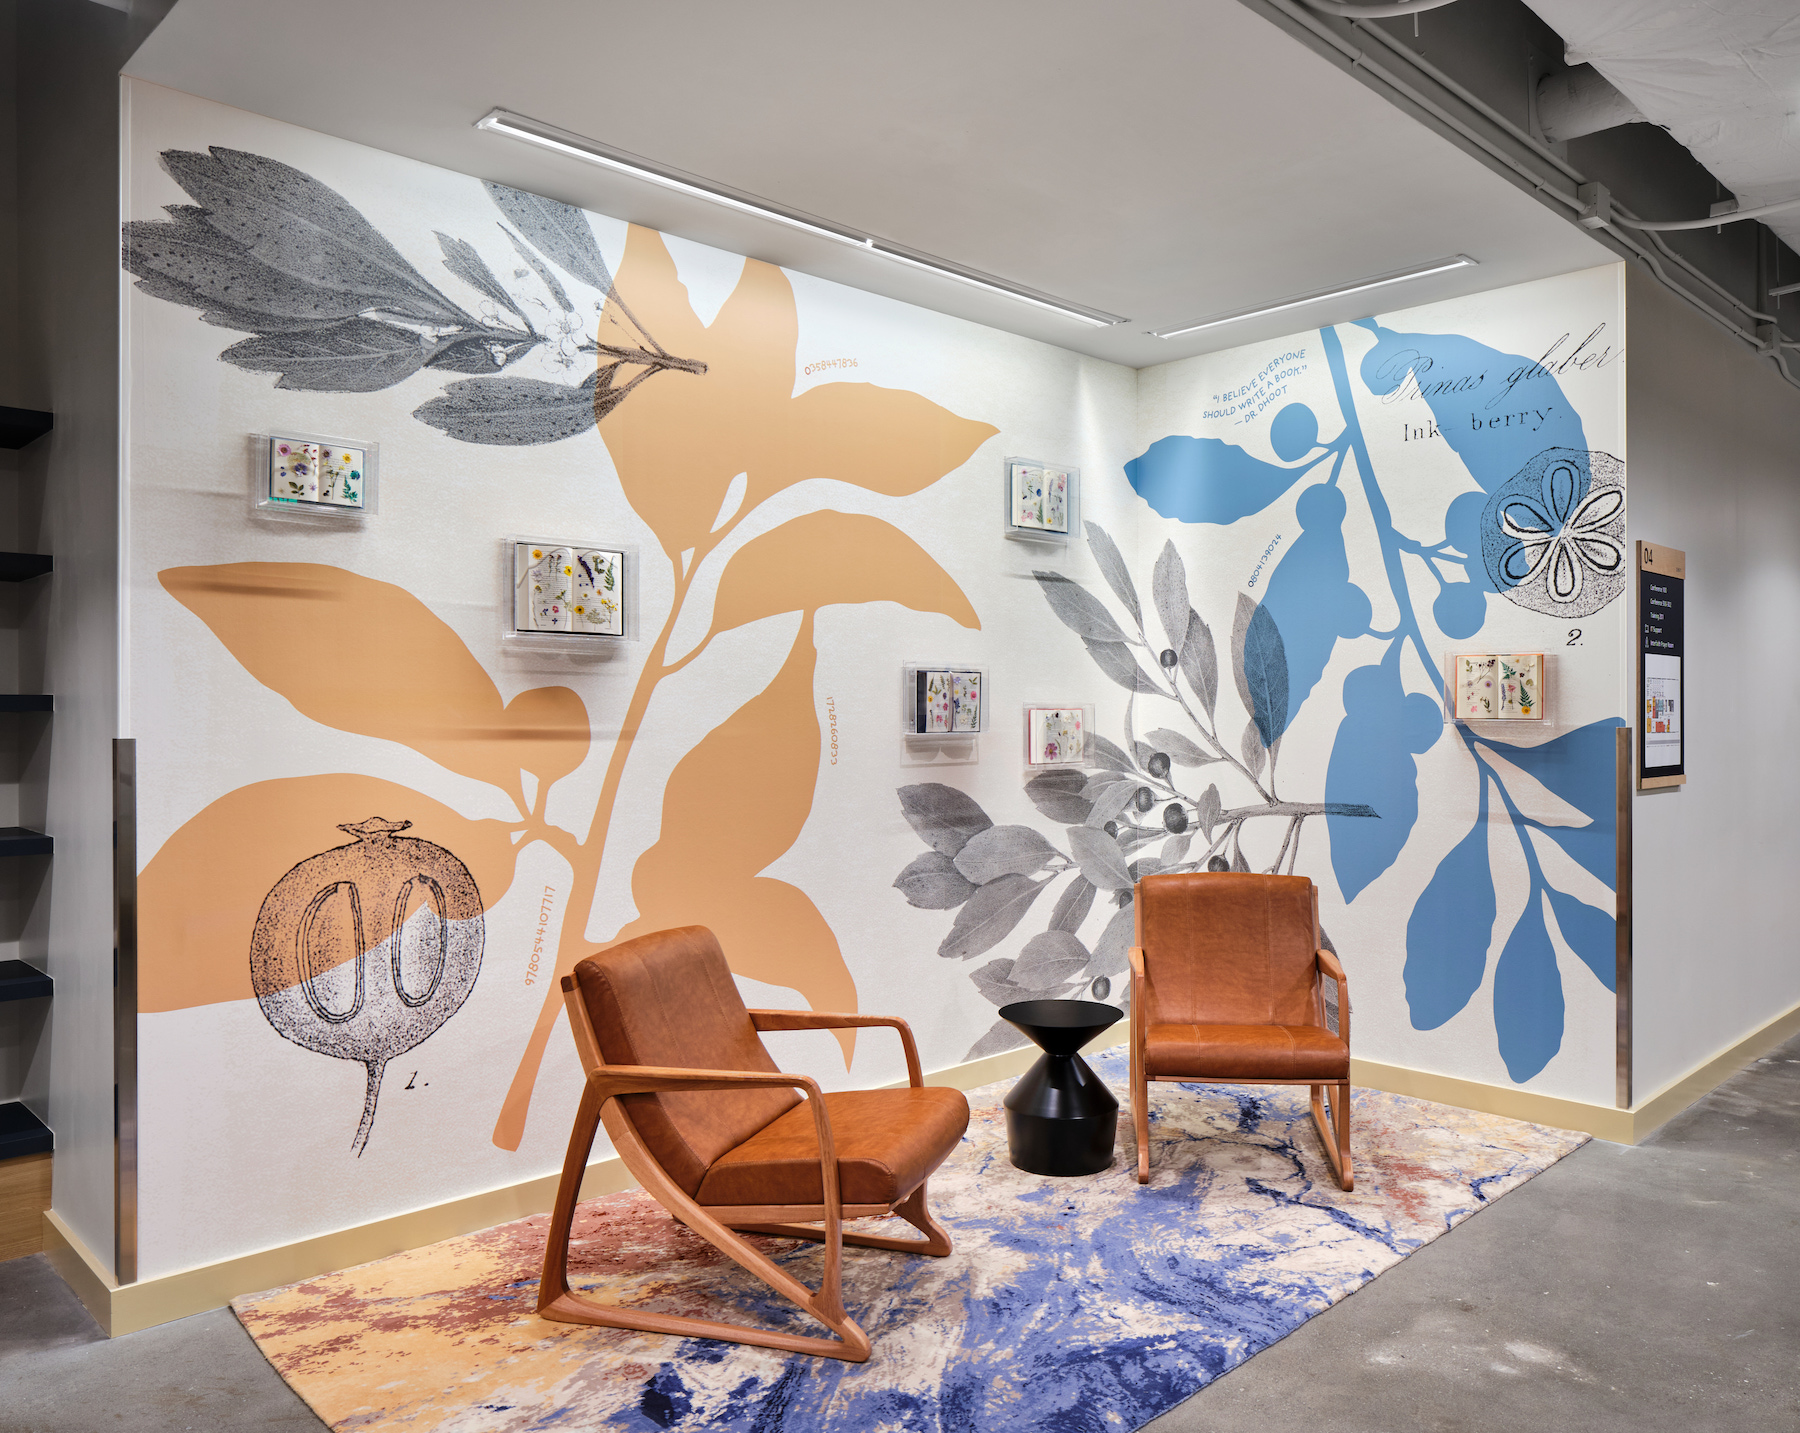 Wall graphics and book installation at Amazon Charleston